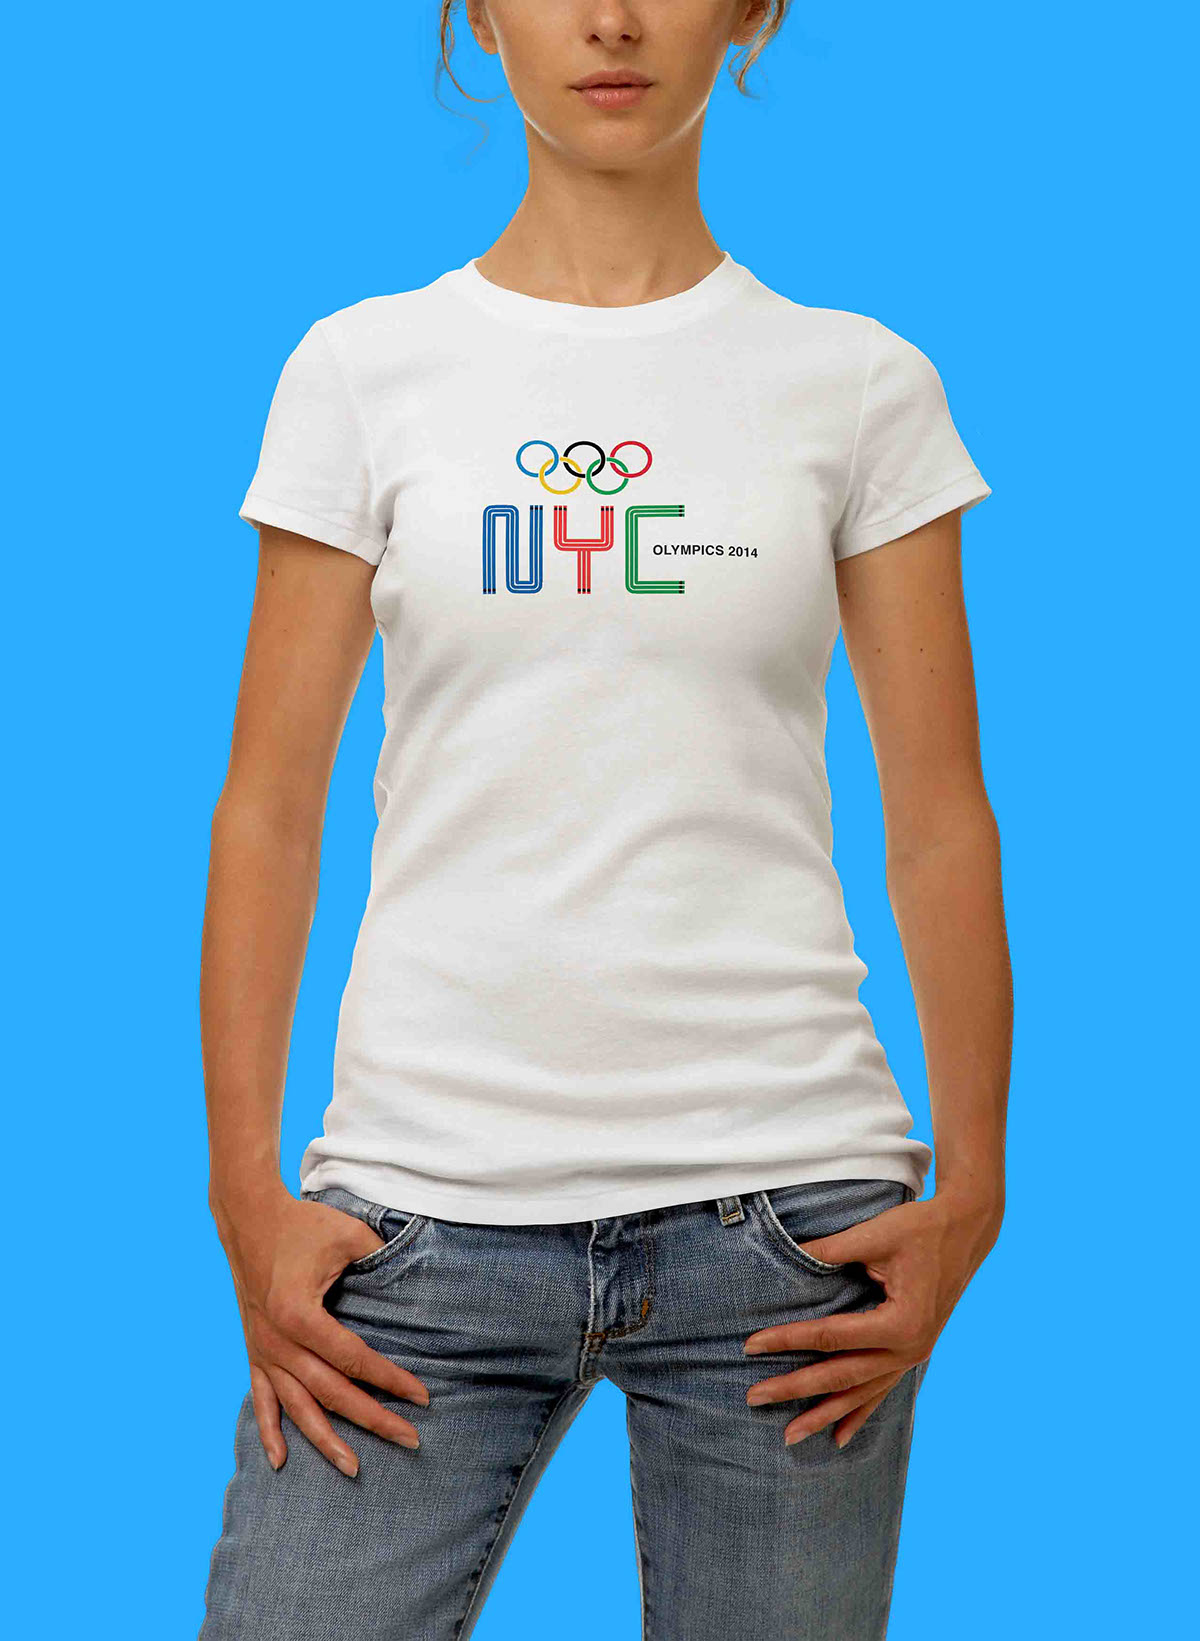 nyc pictograms olympics massimo vignelli nyc pictograms sva Olympics